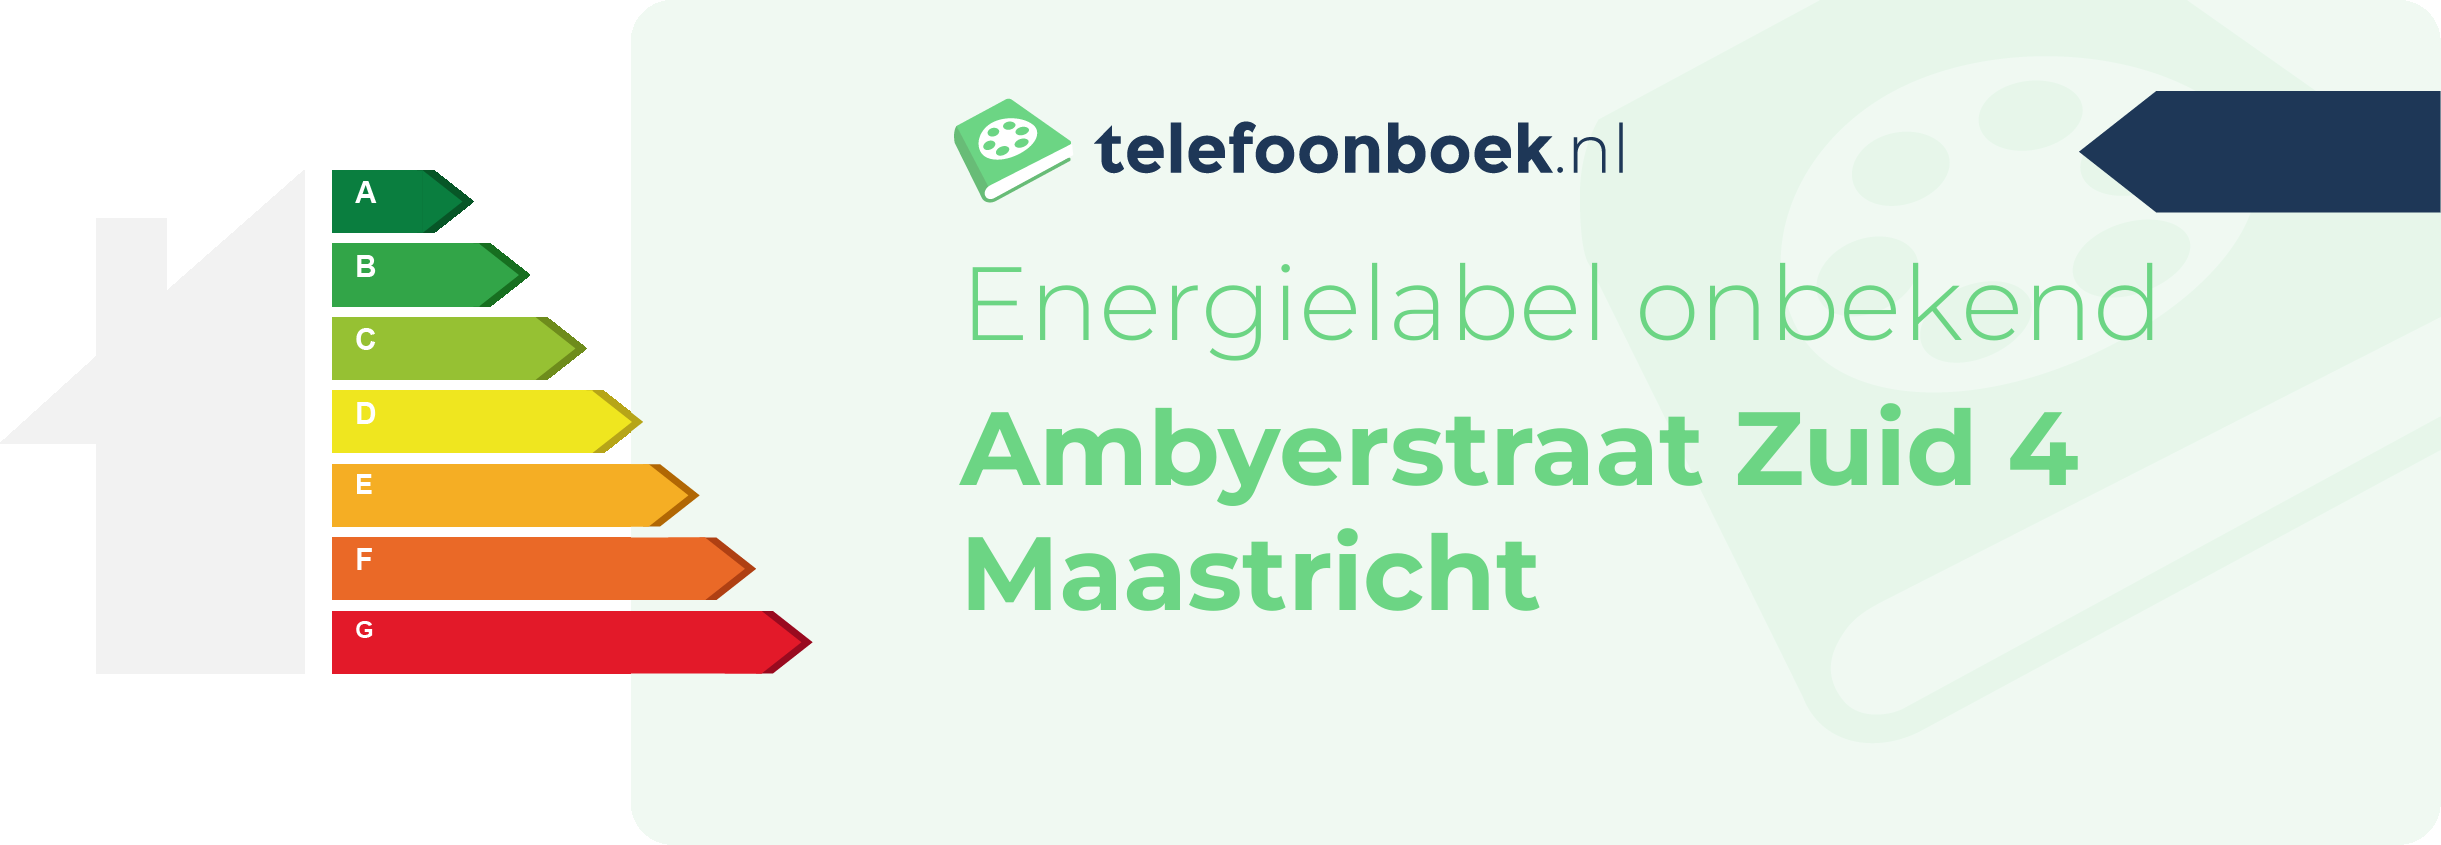 Energielabel Ambyerstraat Zuid 4 Maastricht